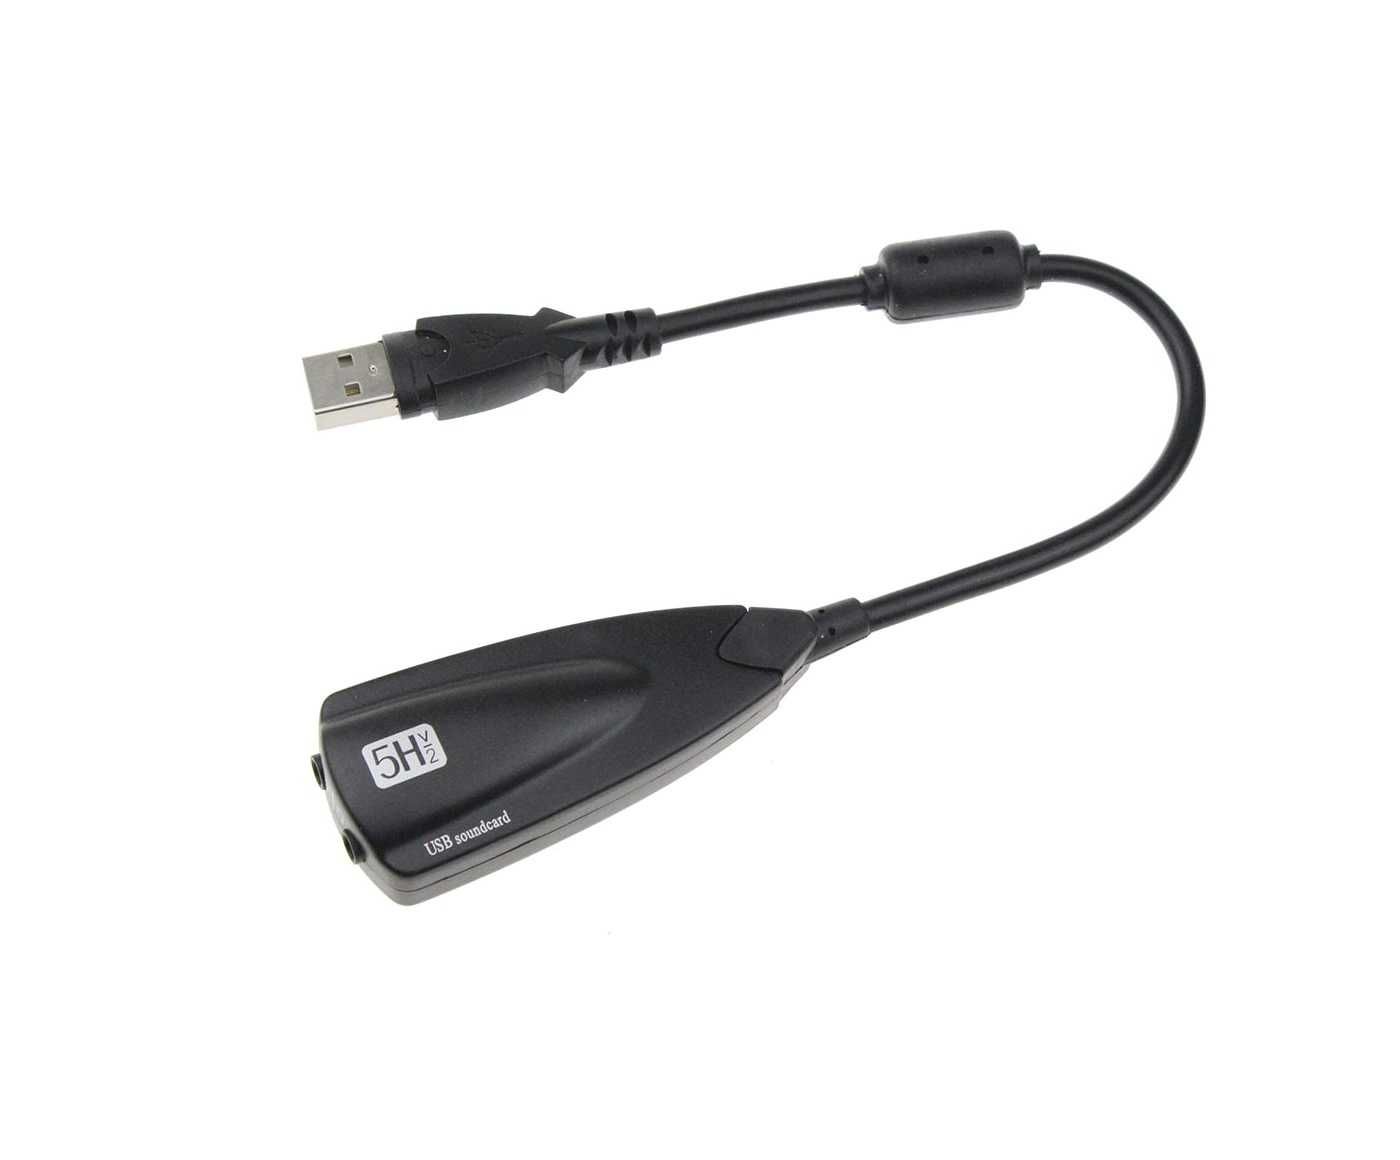 Външна USB звукова карта 7.1 адаптер 5HV2 USB